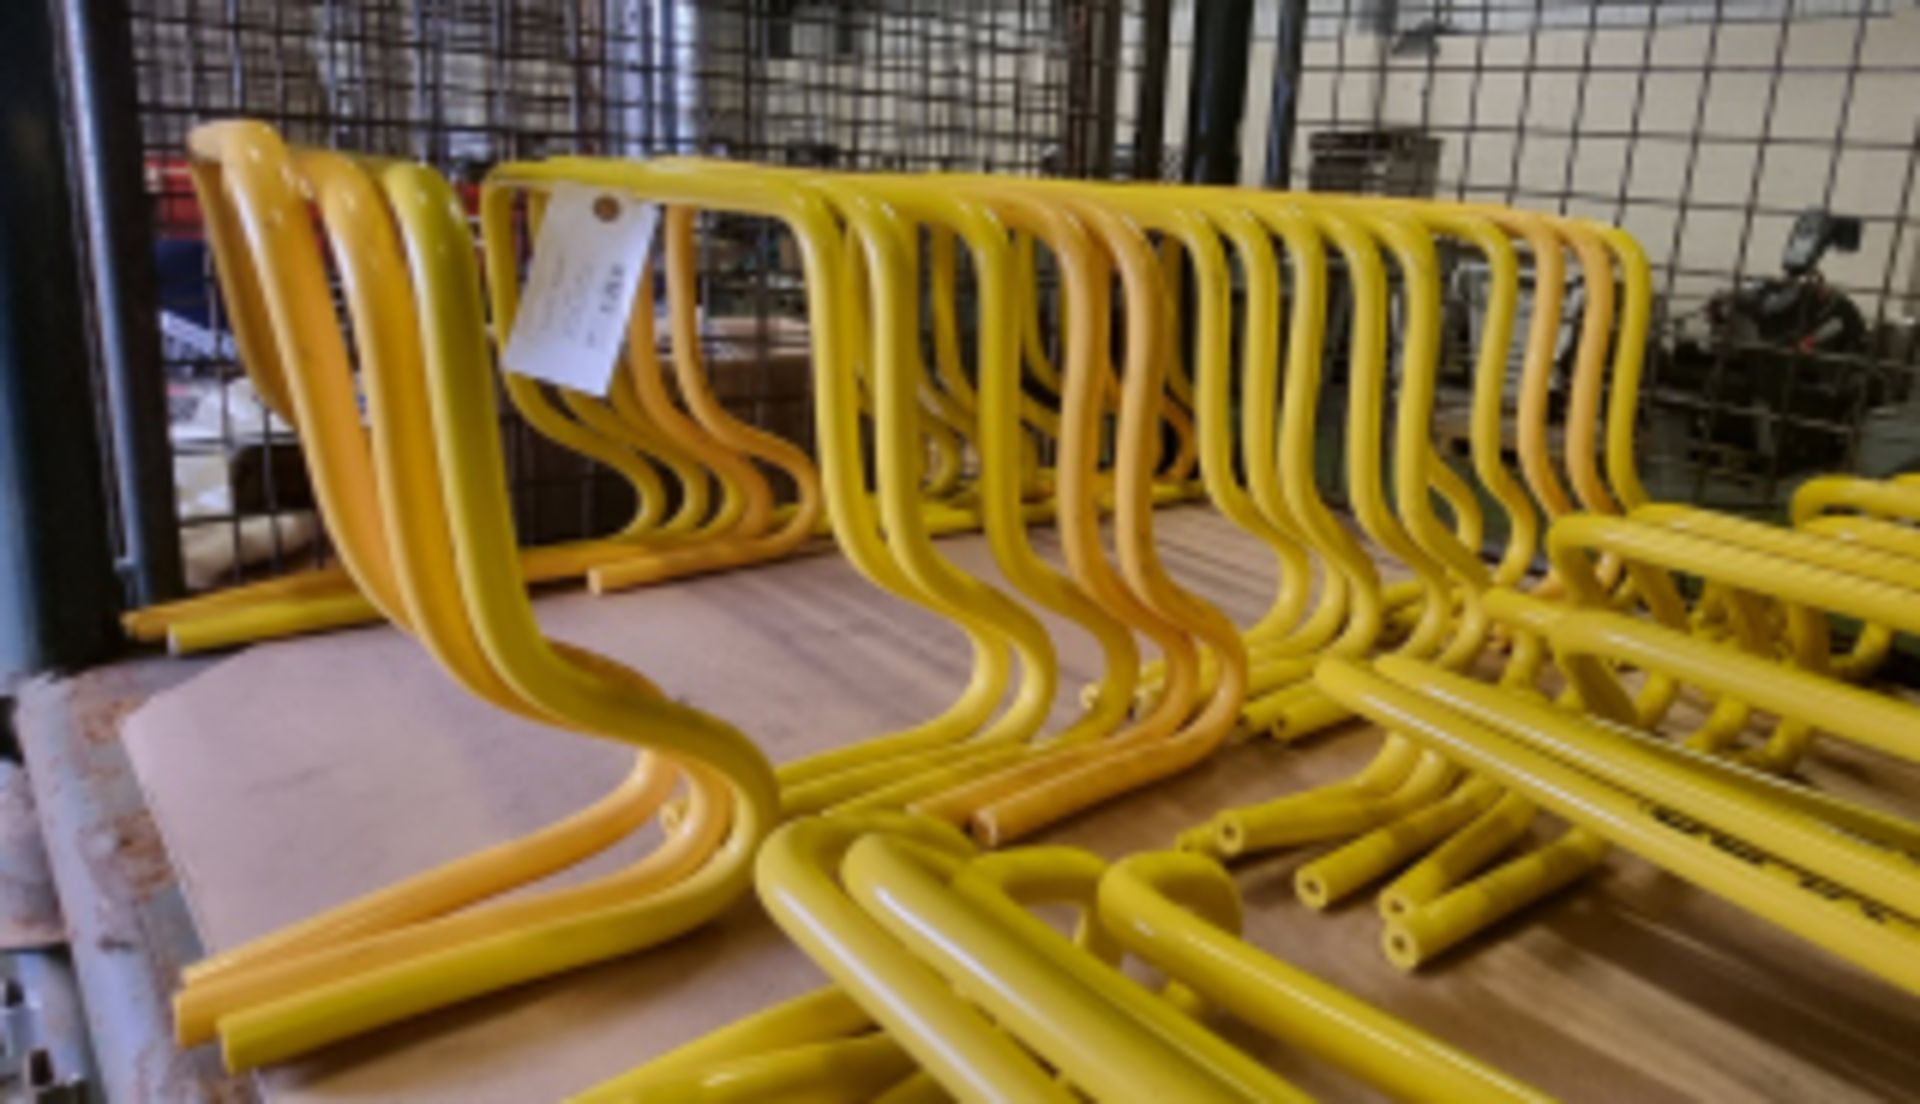 XLR8 yellow plastic training hurdles small - medium 36 units - Image 2 of 3